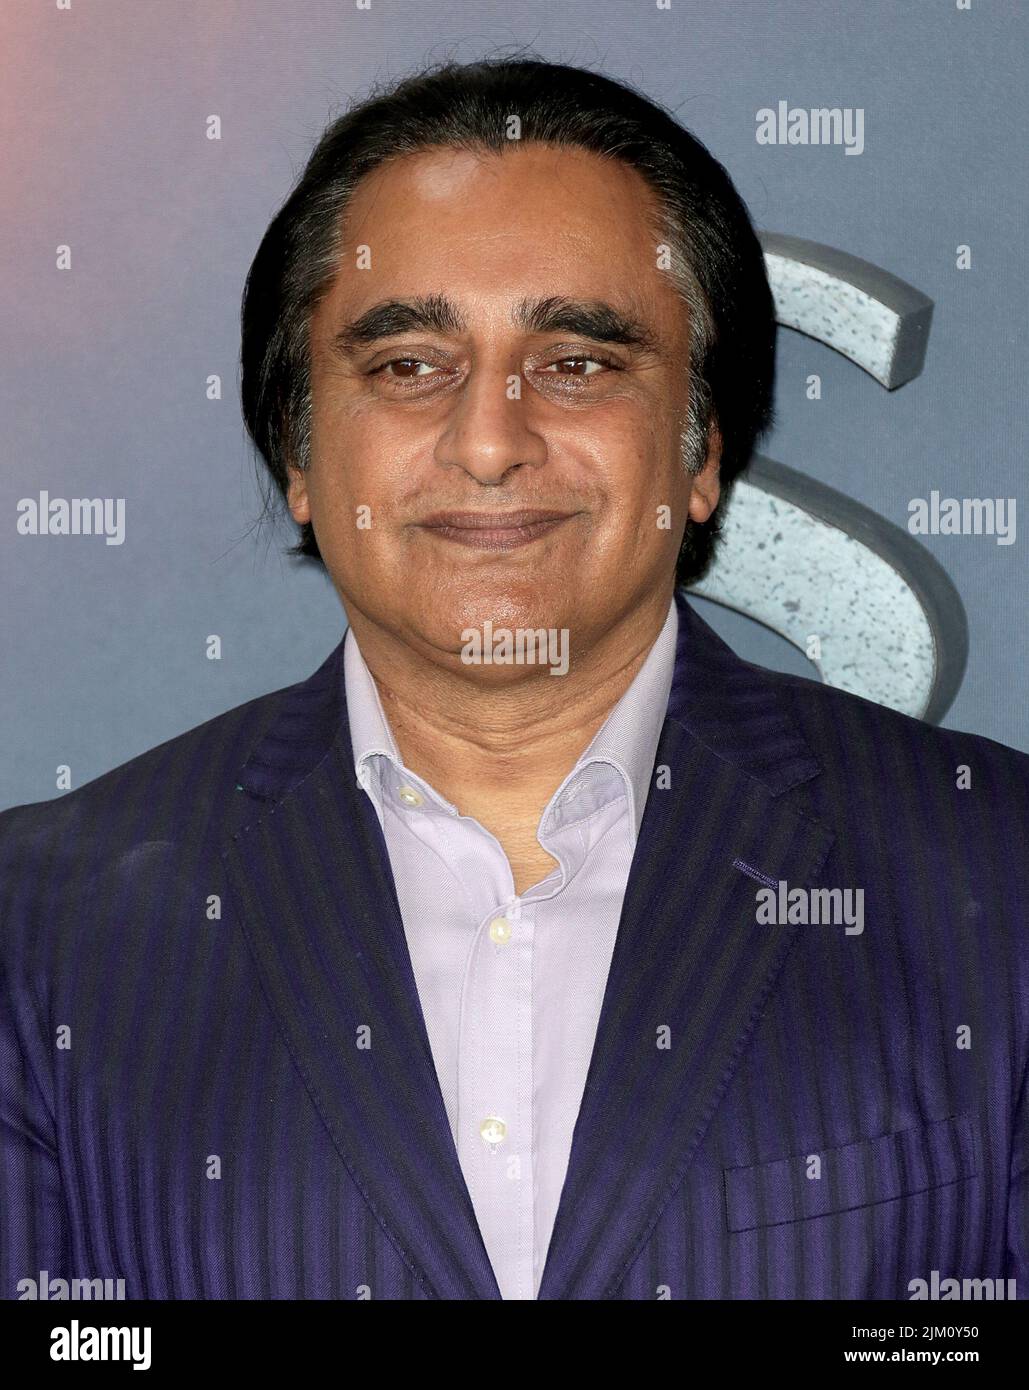 Aug 03, 2022 - London, England, UK - Sanjeev Bhaskar attending The Sandman World TV premiere, BFI Southbank Stock Photo